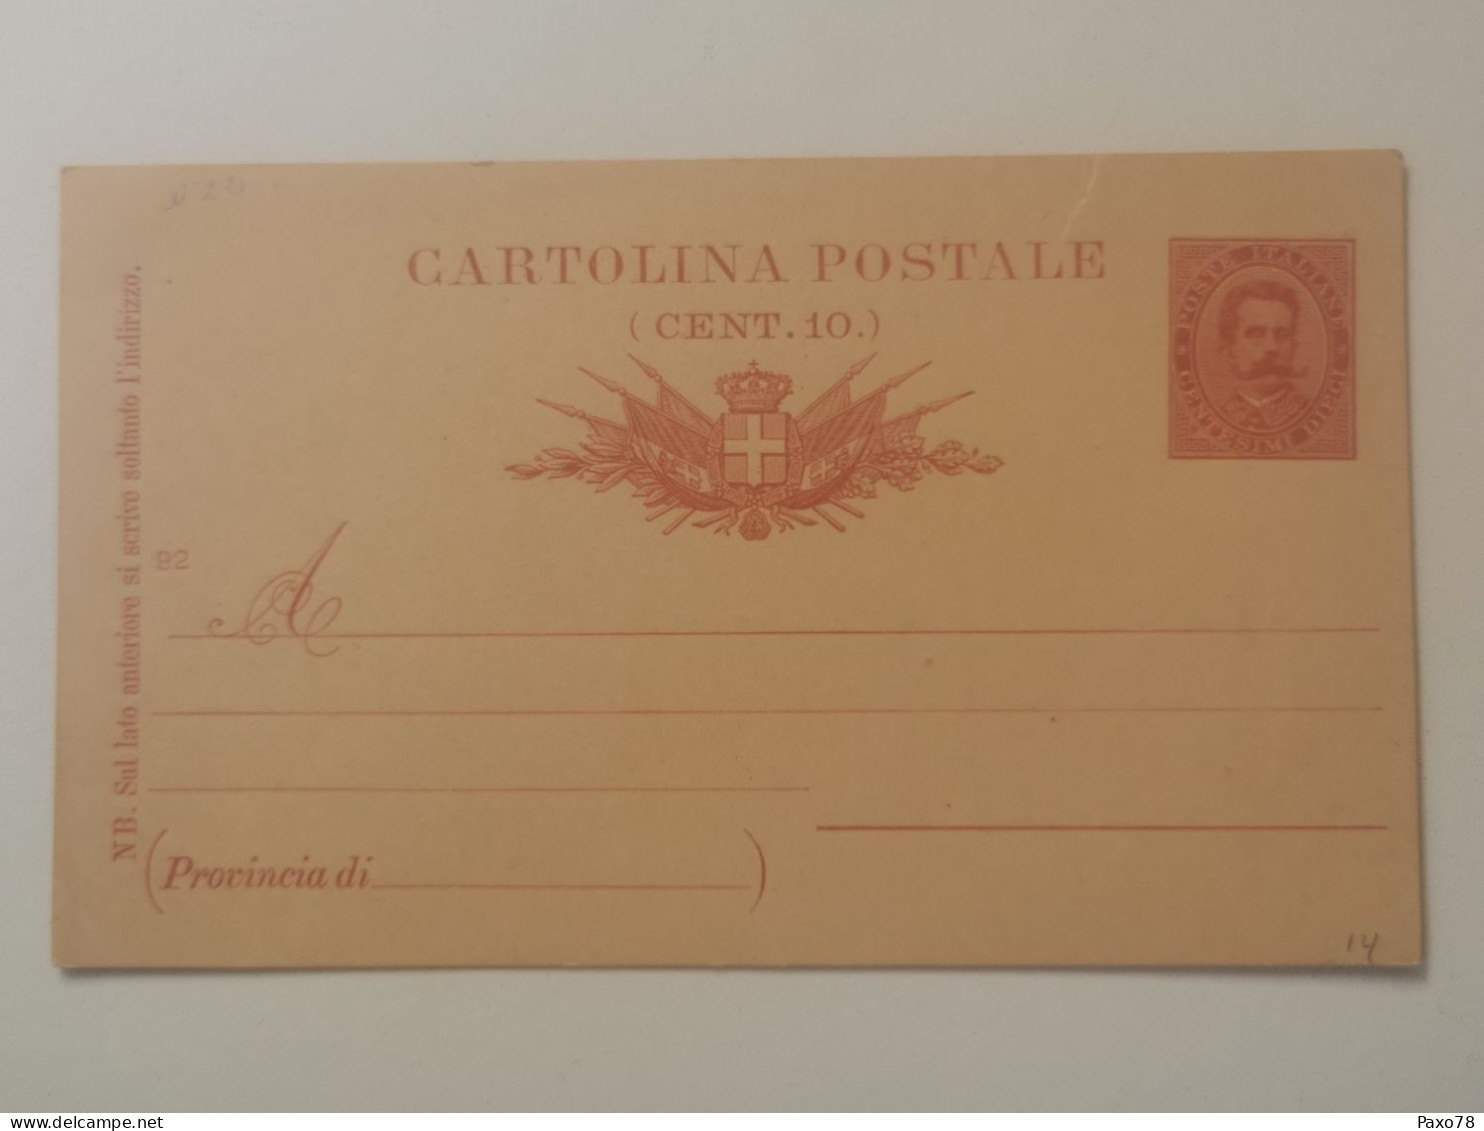 Cartolina Postale, 10C Vierge - Entero Postal